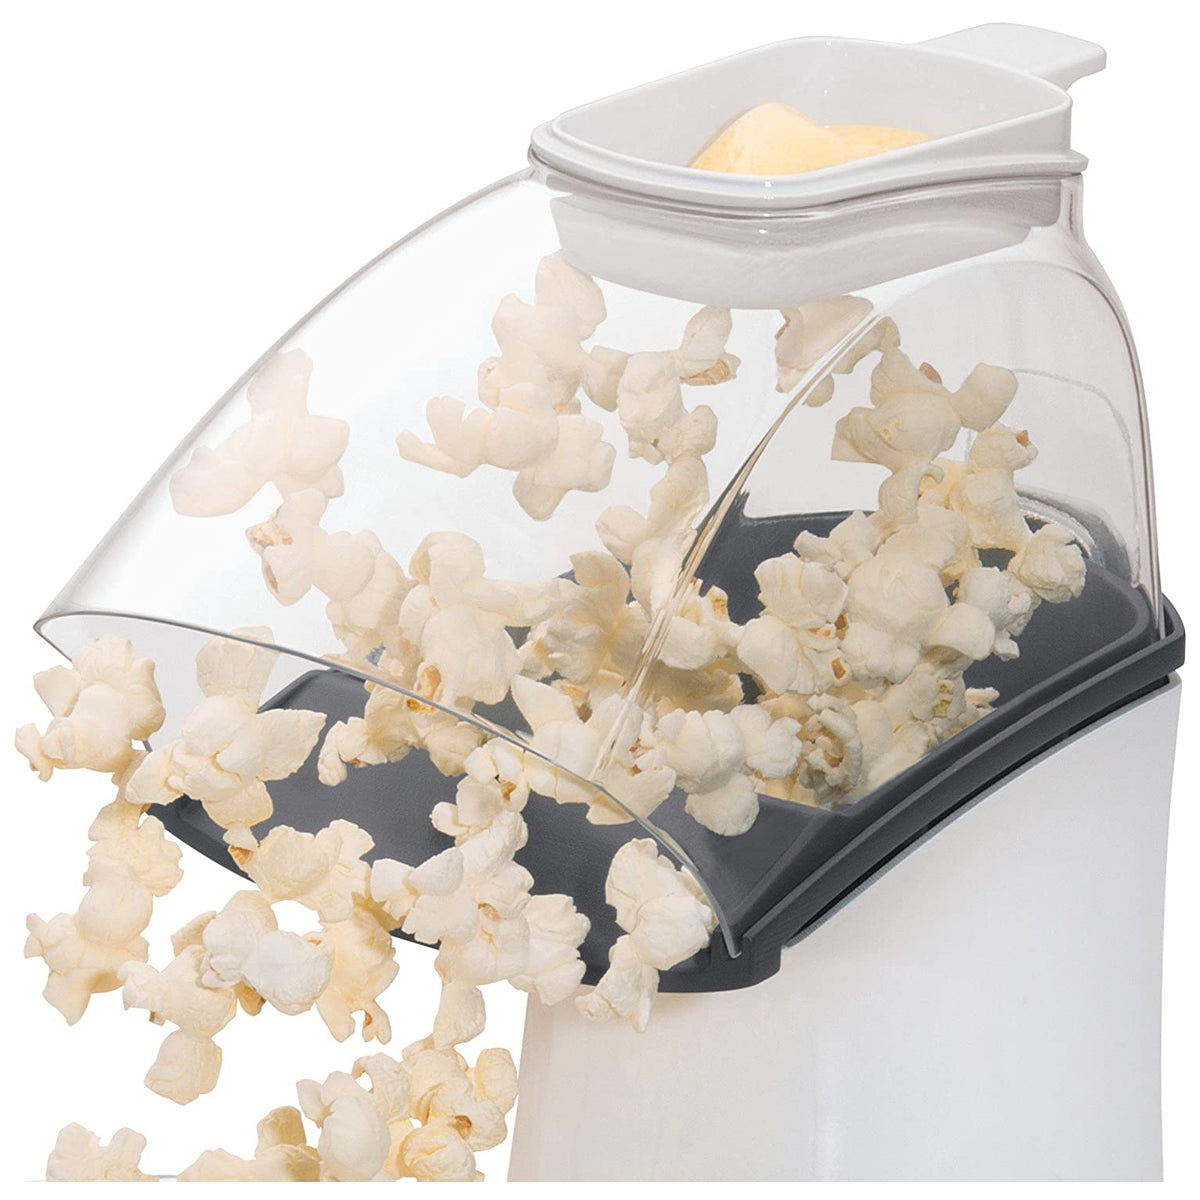 Presto 04821 Orville Redenbacher's Hot Air Popcorn Popper, White, 4 Oz Kernel